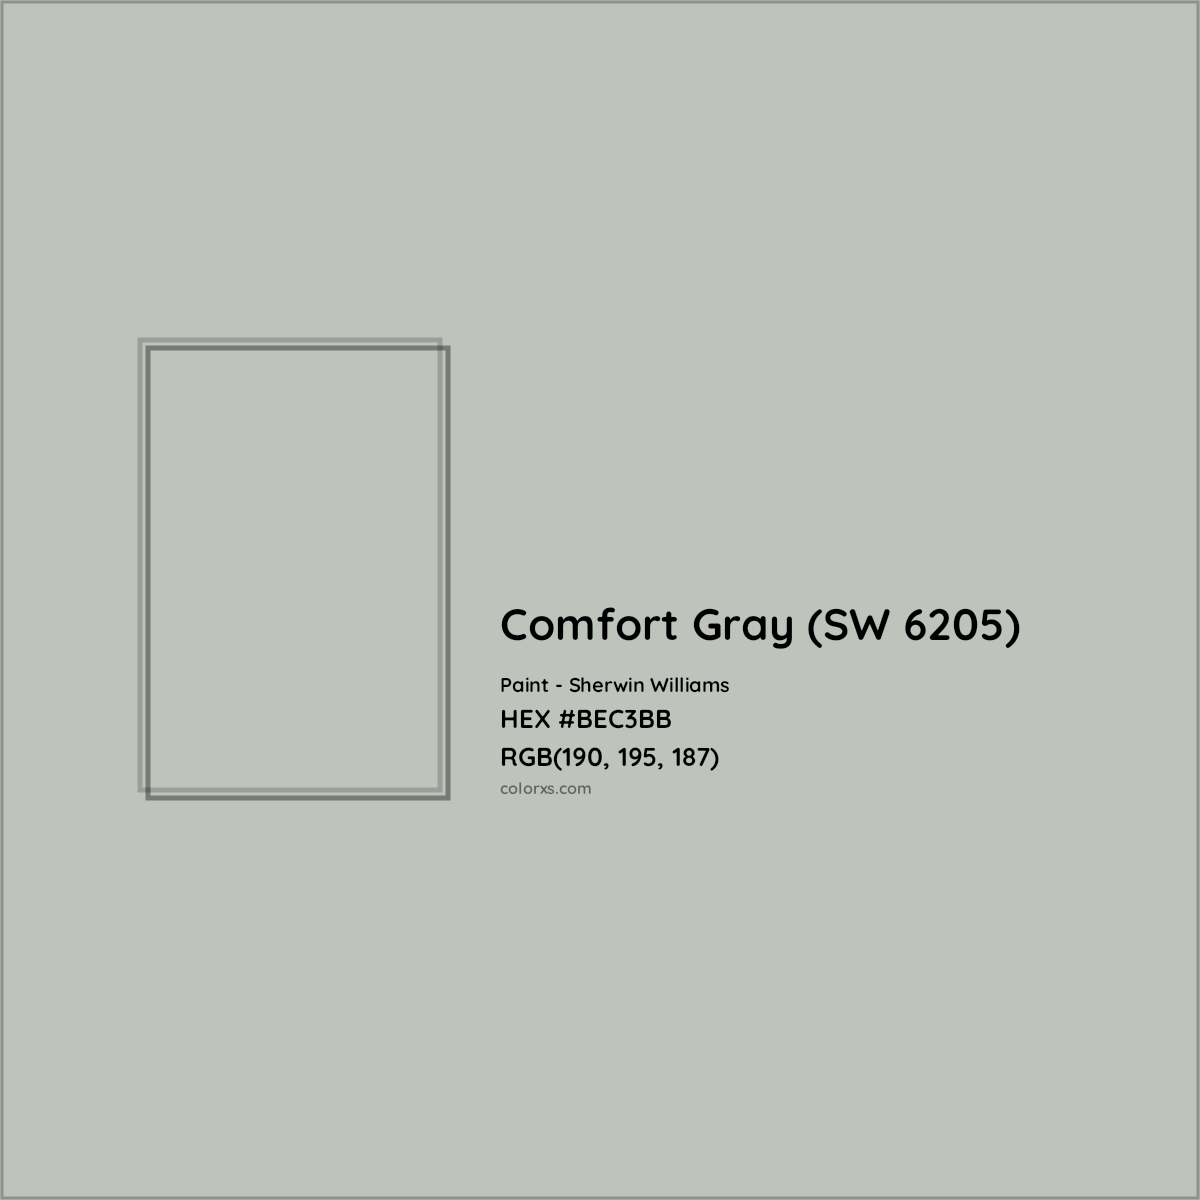 HEX #BEC3BB Comfort Gray (SW 6205) Paint Sherwin Williams - Color Code